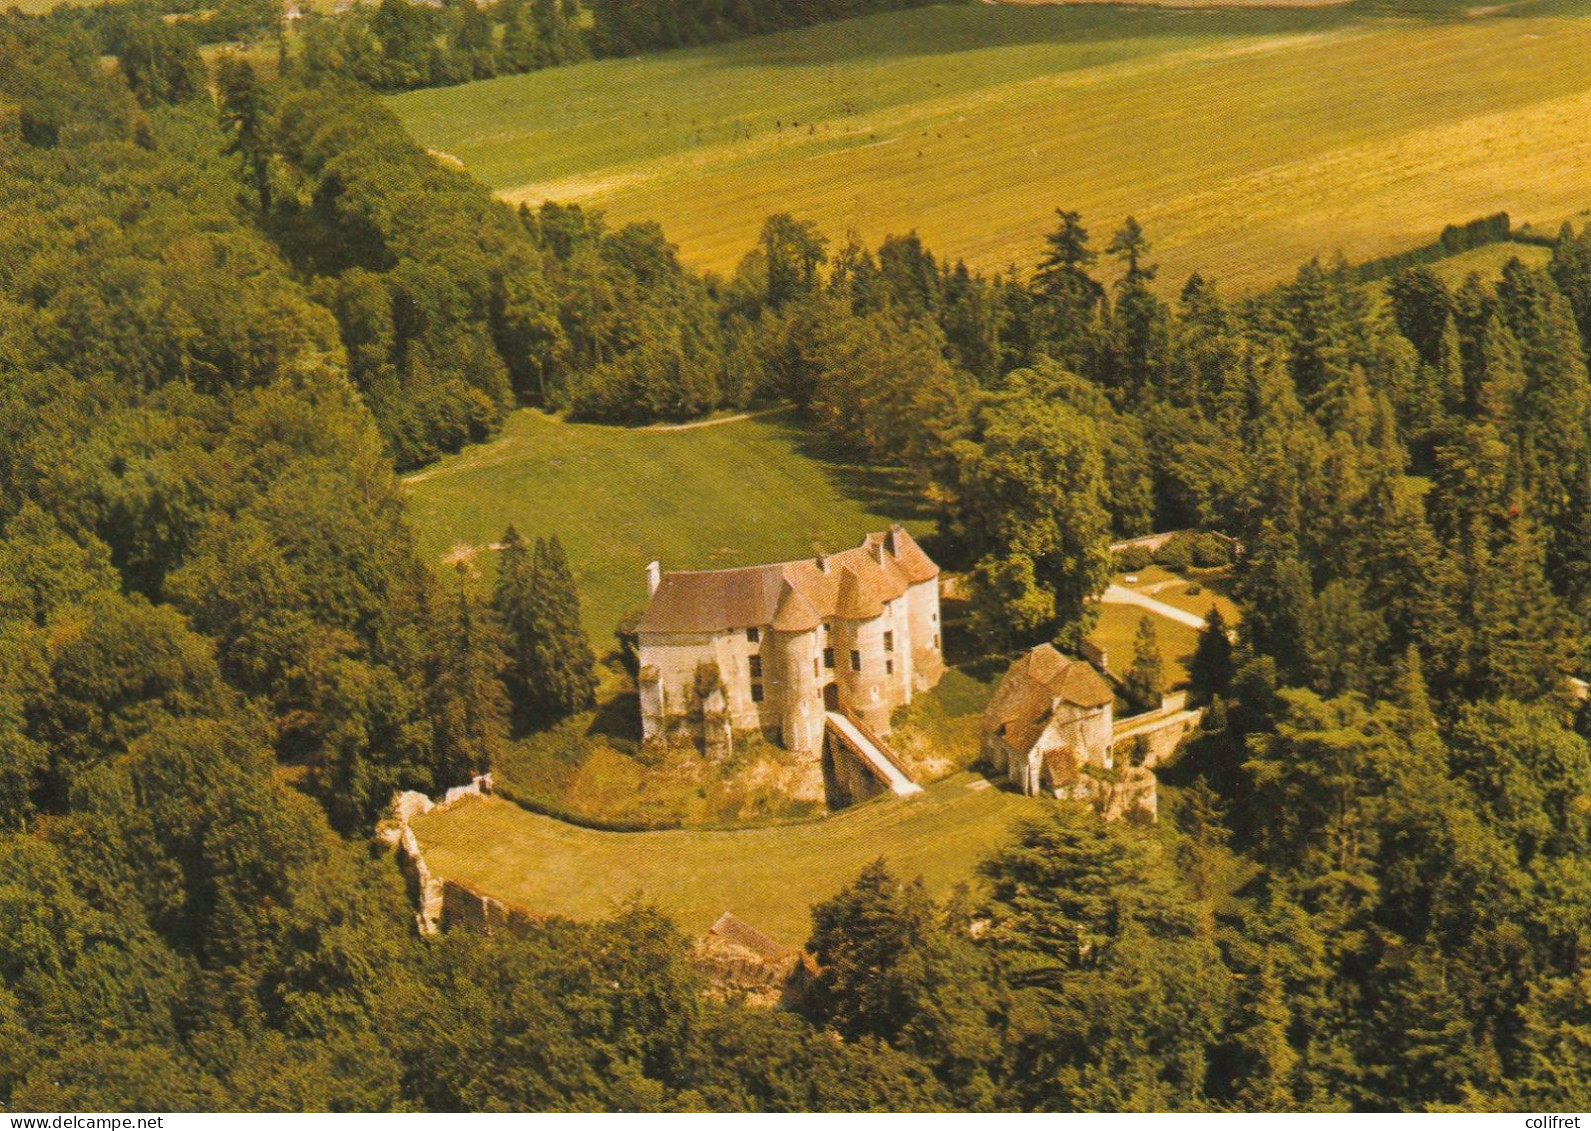 27 - Harcourt - Château Féodal  -  Vue Aérienne - Harcourt